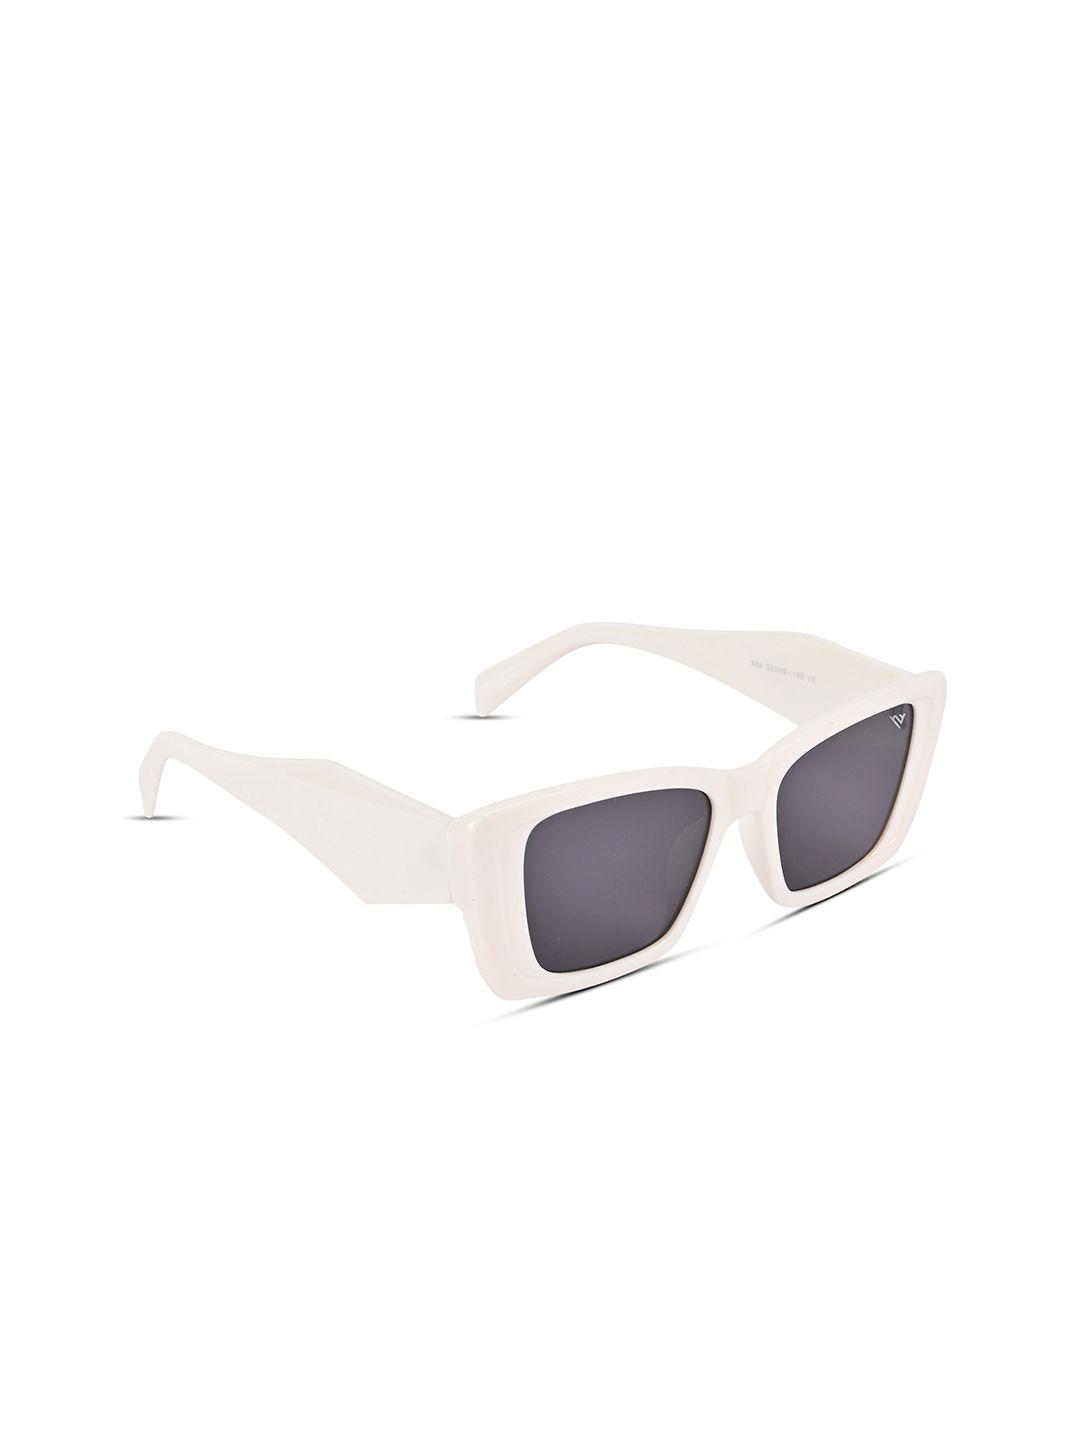 voyage unisex black lens & white wayfarer sunglasses with uv protected lens